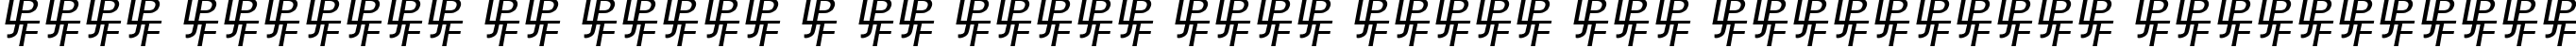 Пример написания шрифтом Caslon Calligraphic Initials текста на украинском